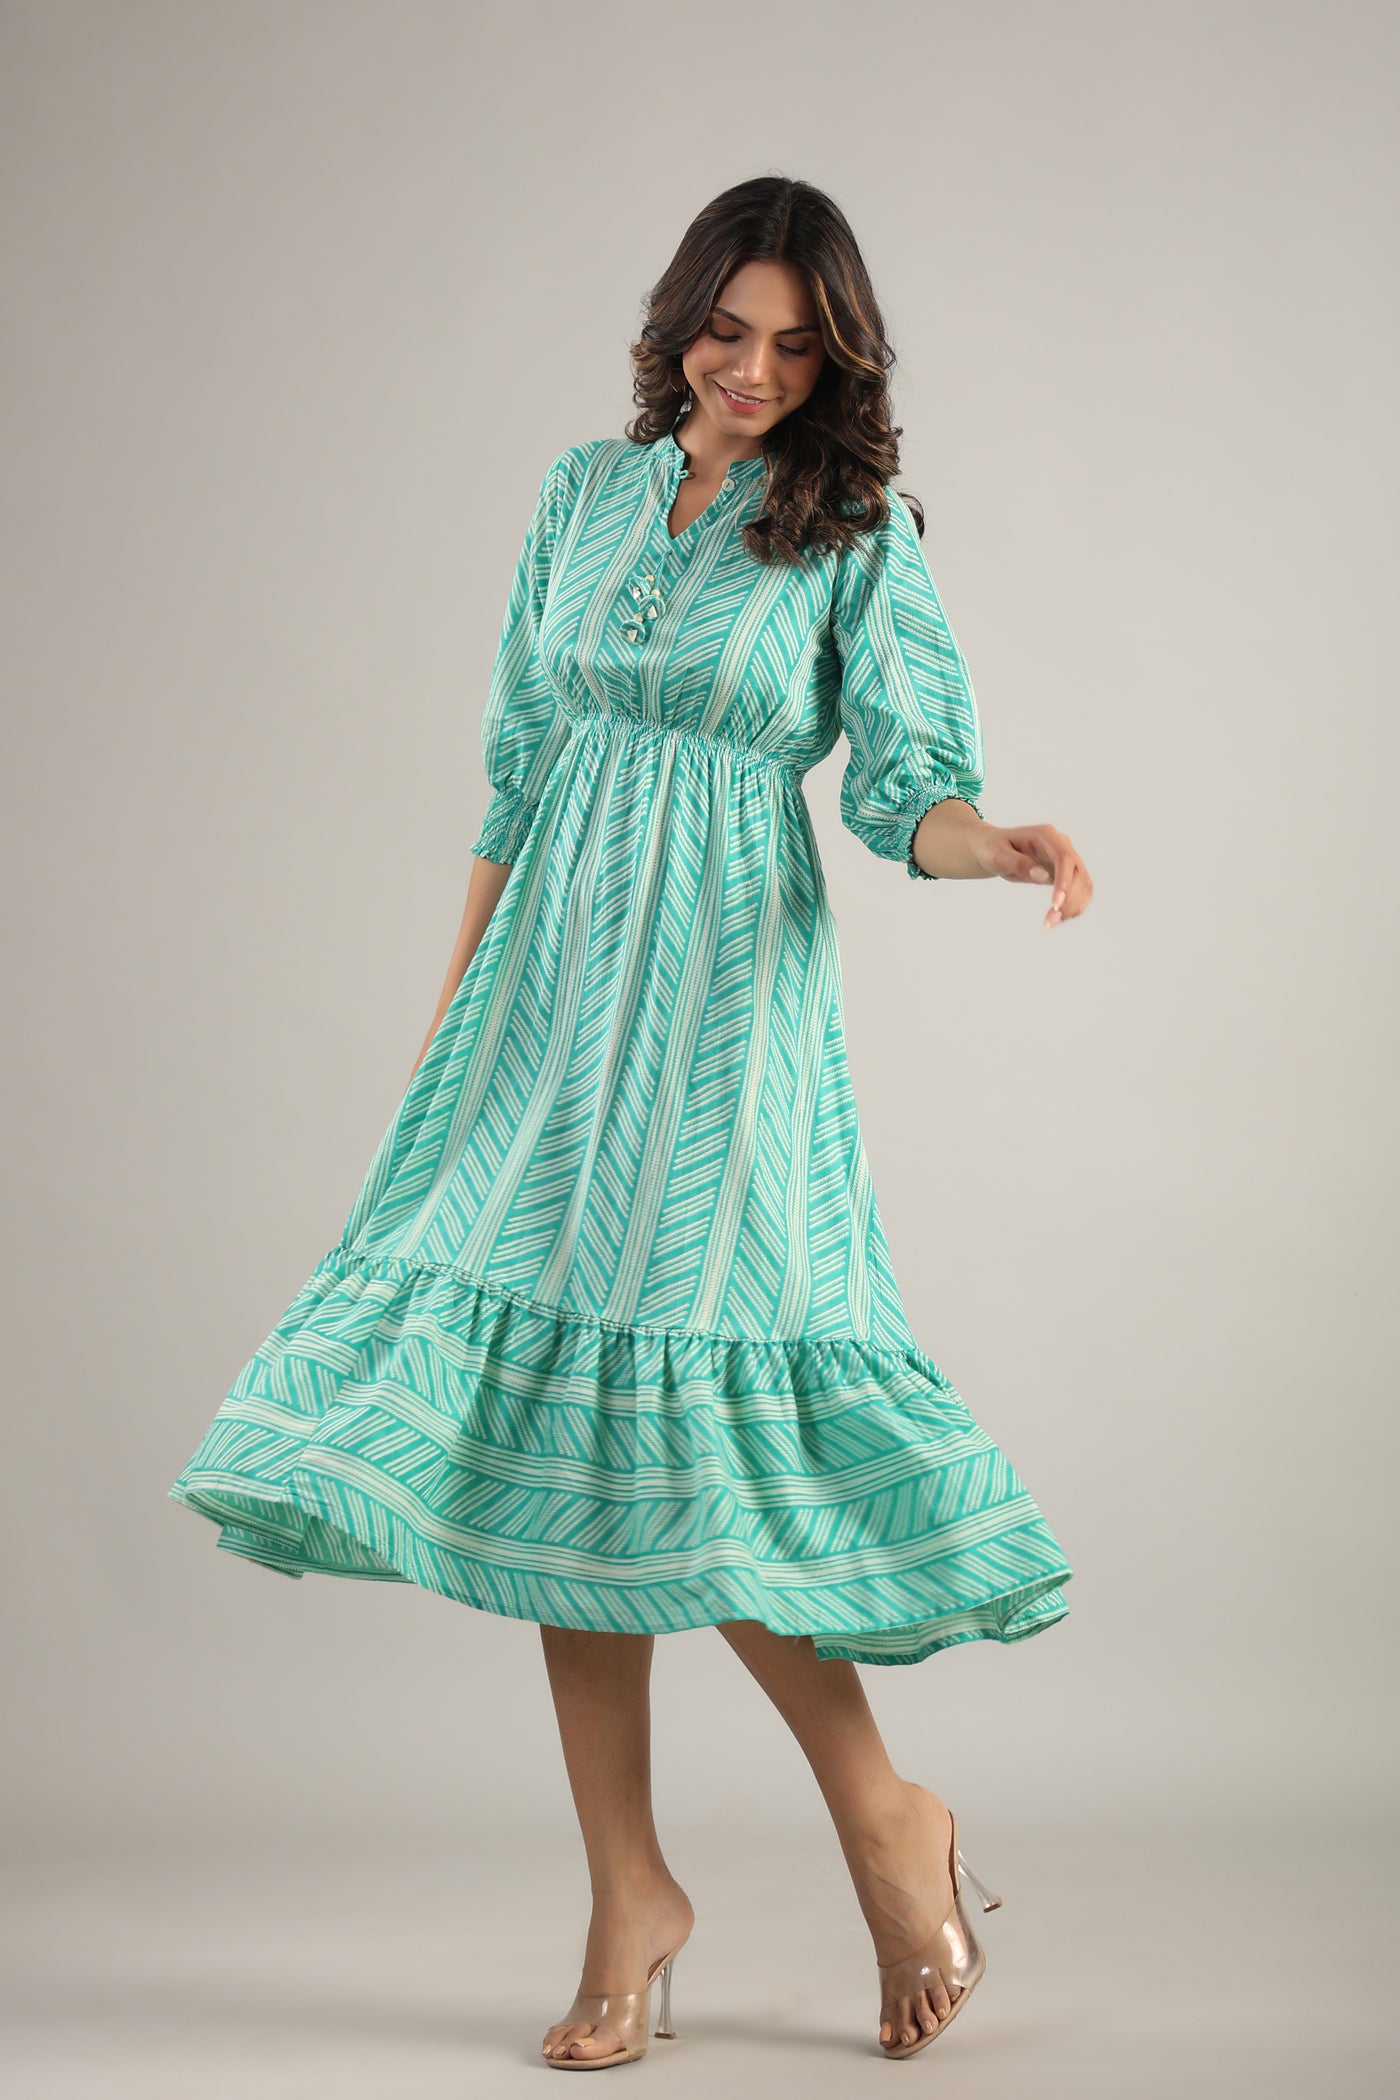 Patterned Shibori on turquoise MIDI Cotton Dress